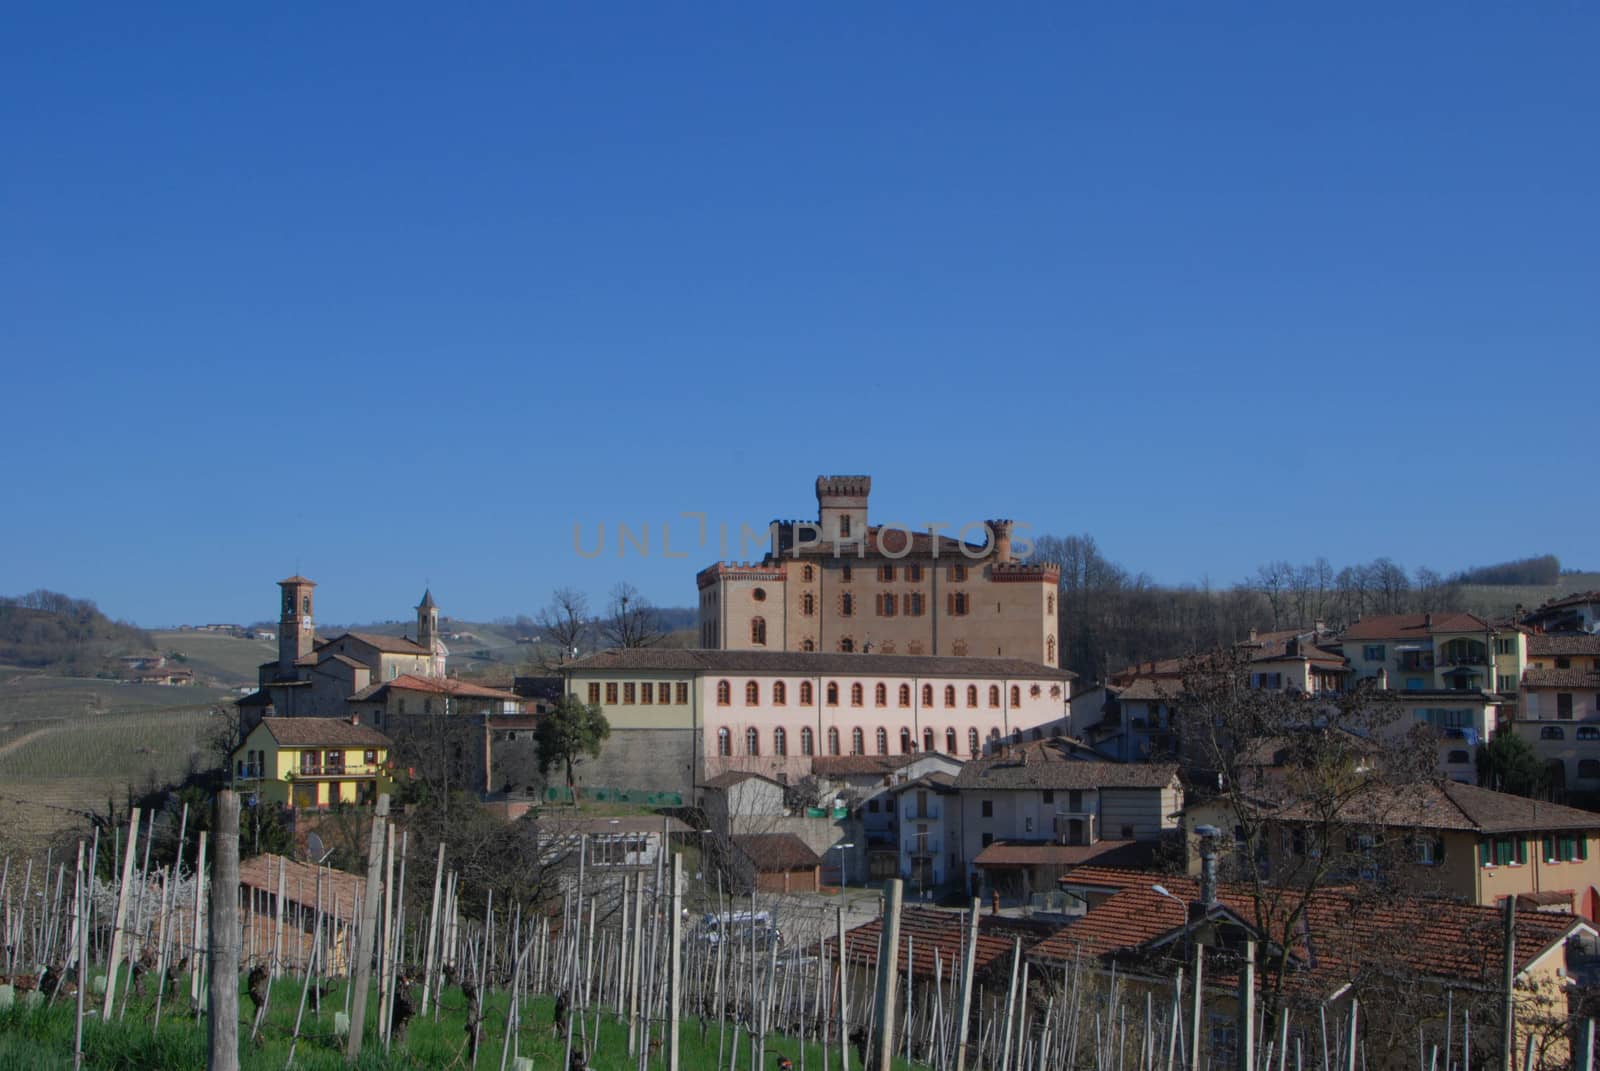 Castle "Falletti" of Barolo, Cuneo - Piedmont by cosca